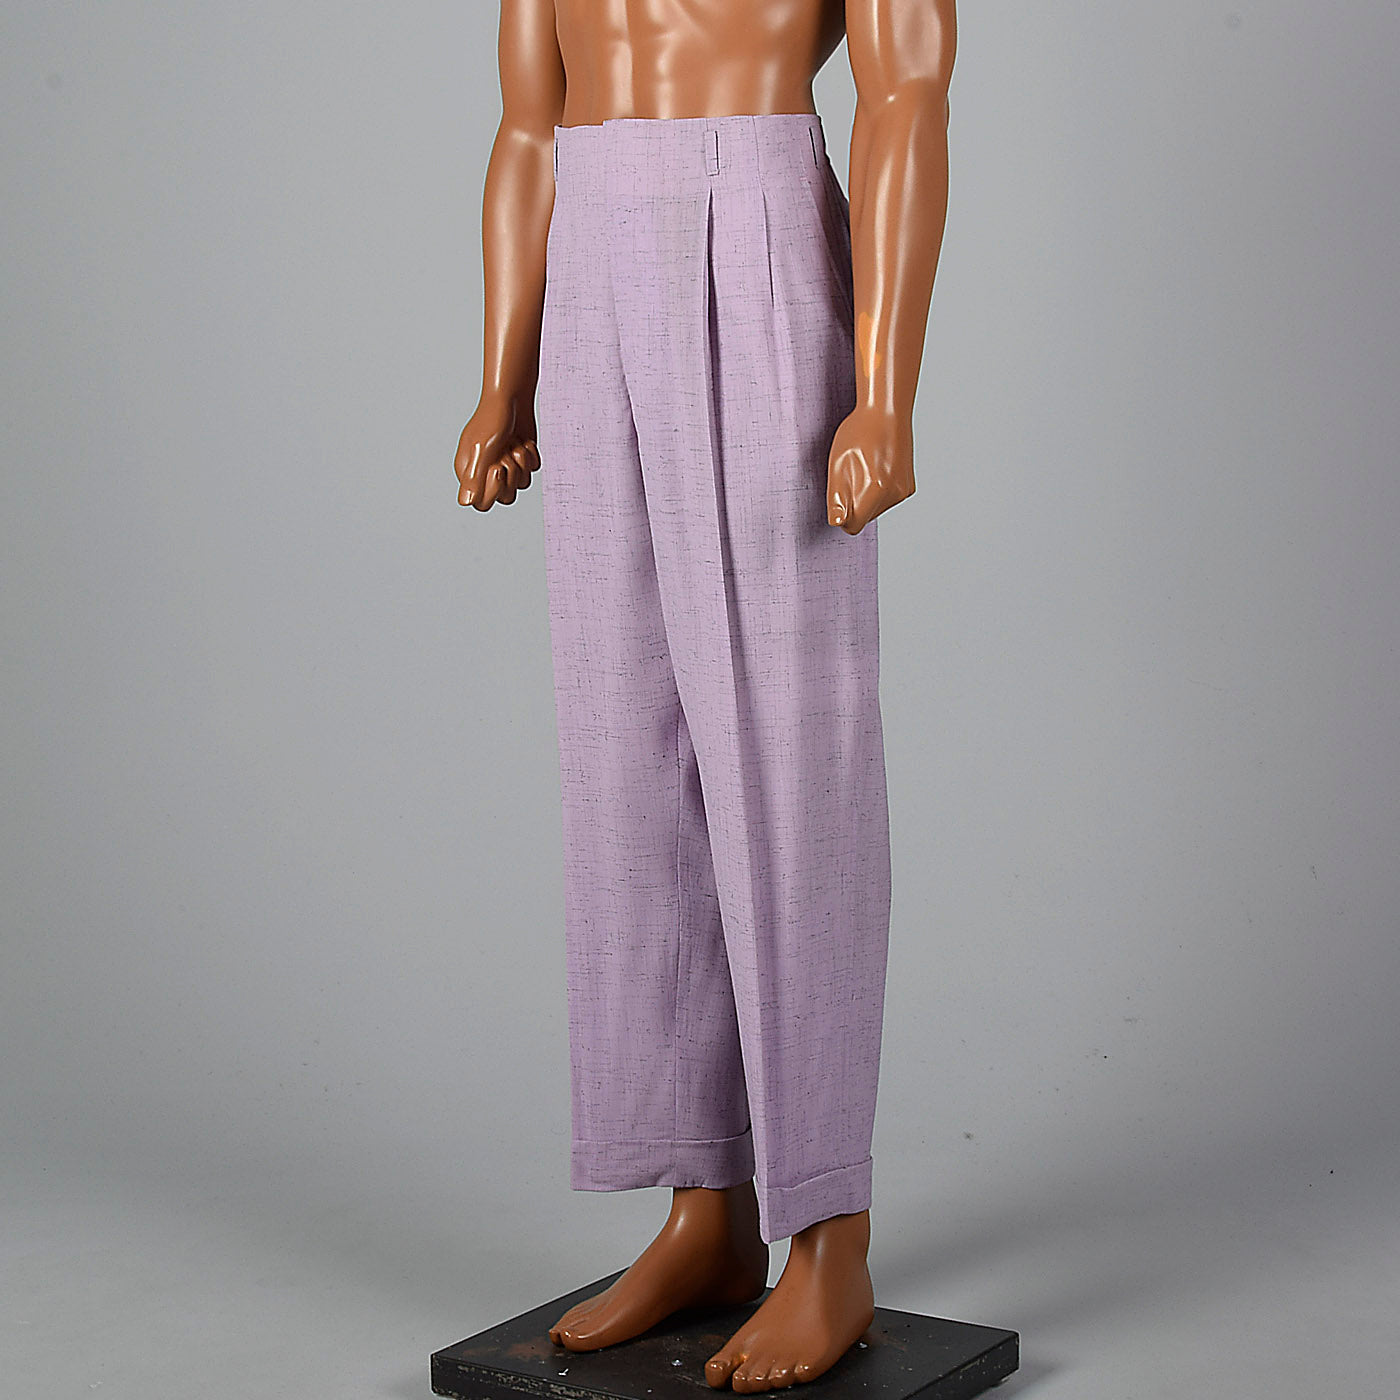 1950s Mens Hollywood Waist Pants Lavender Rayon with Gray Flecks